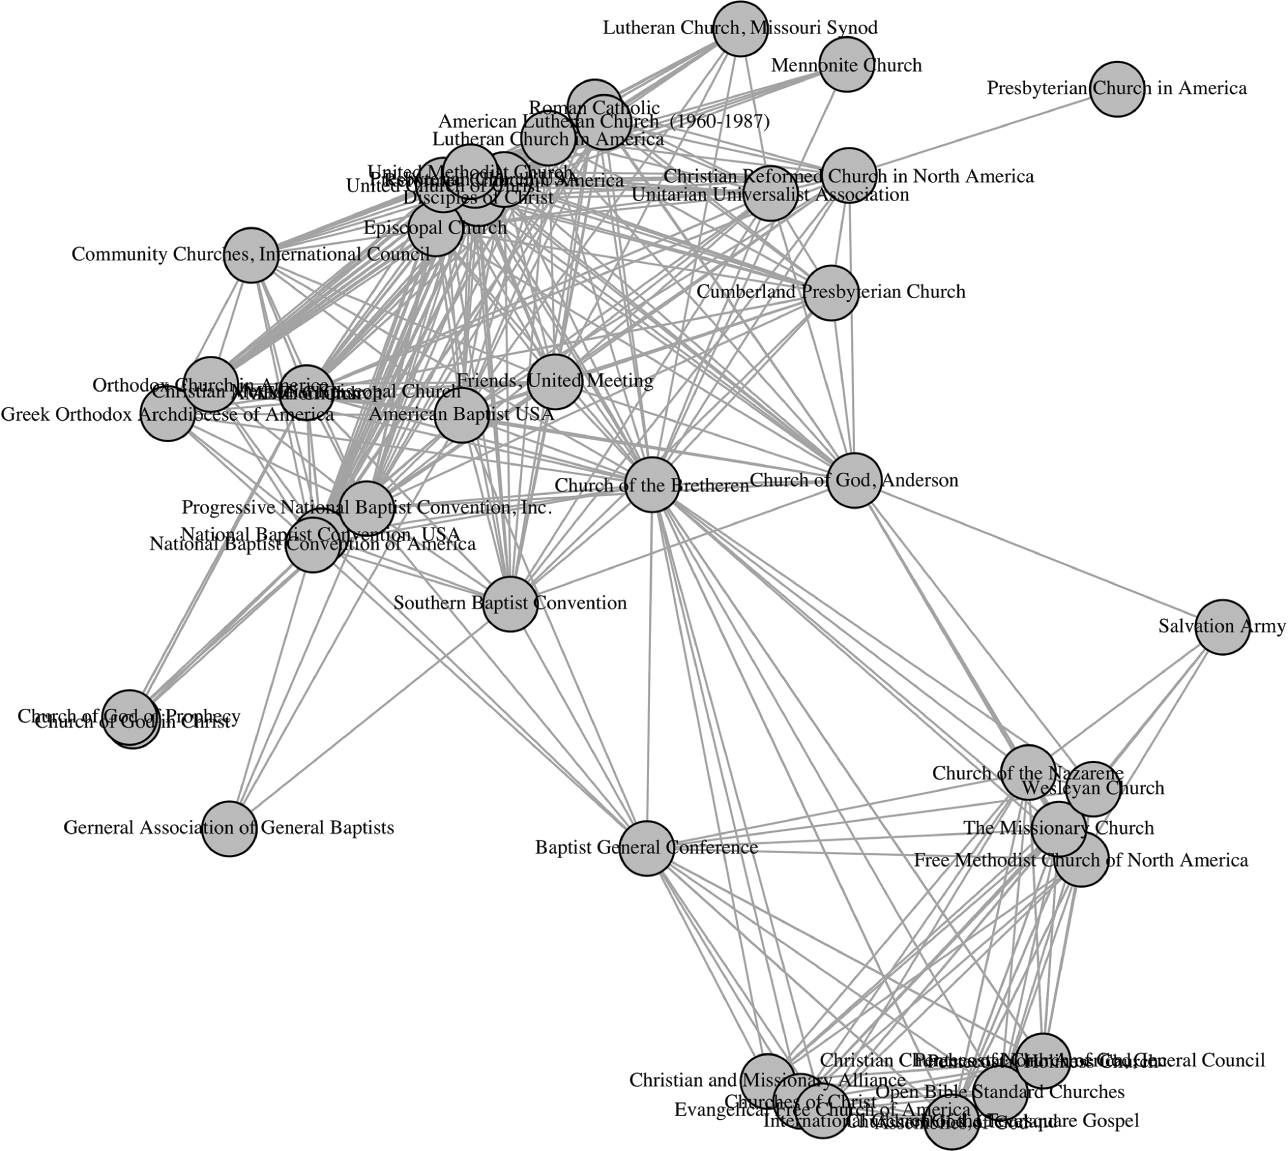 Social Network Analysis - Cambridge Intelligence